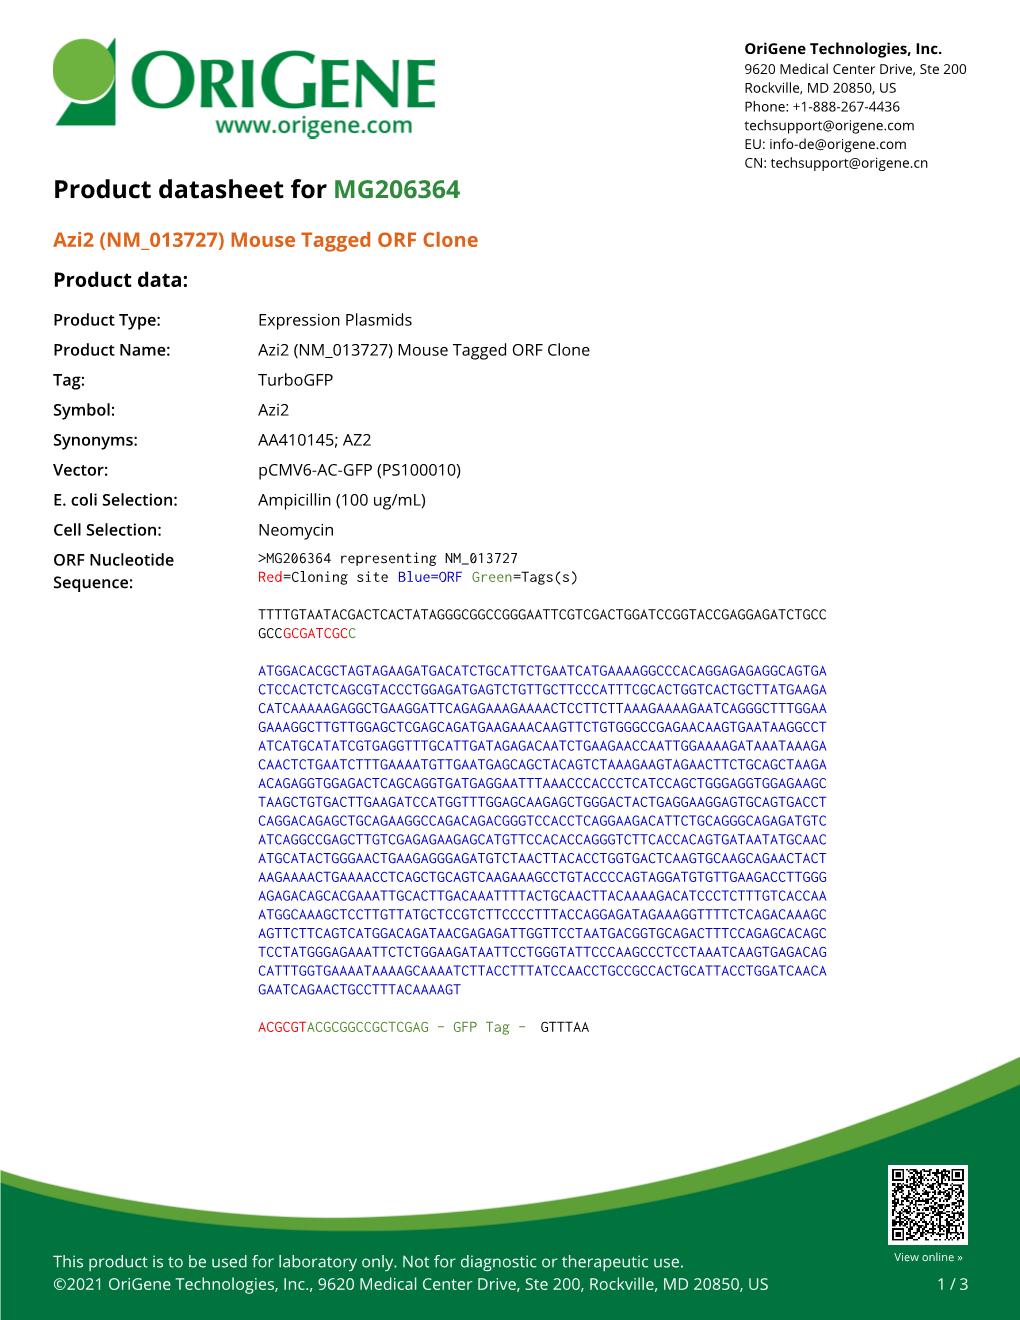 Azi2 (NM 013727) Mouse Tagged ORF Clone – MG206364 | Origene